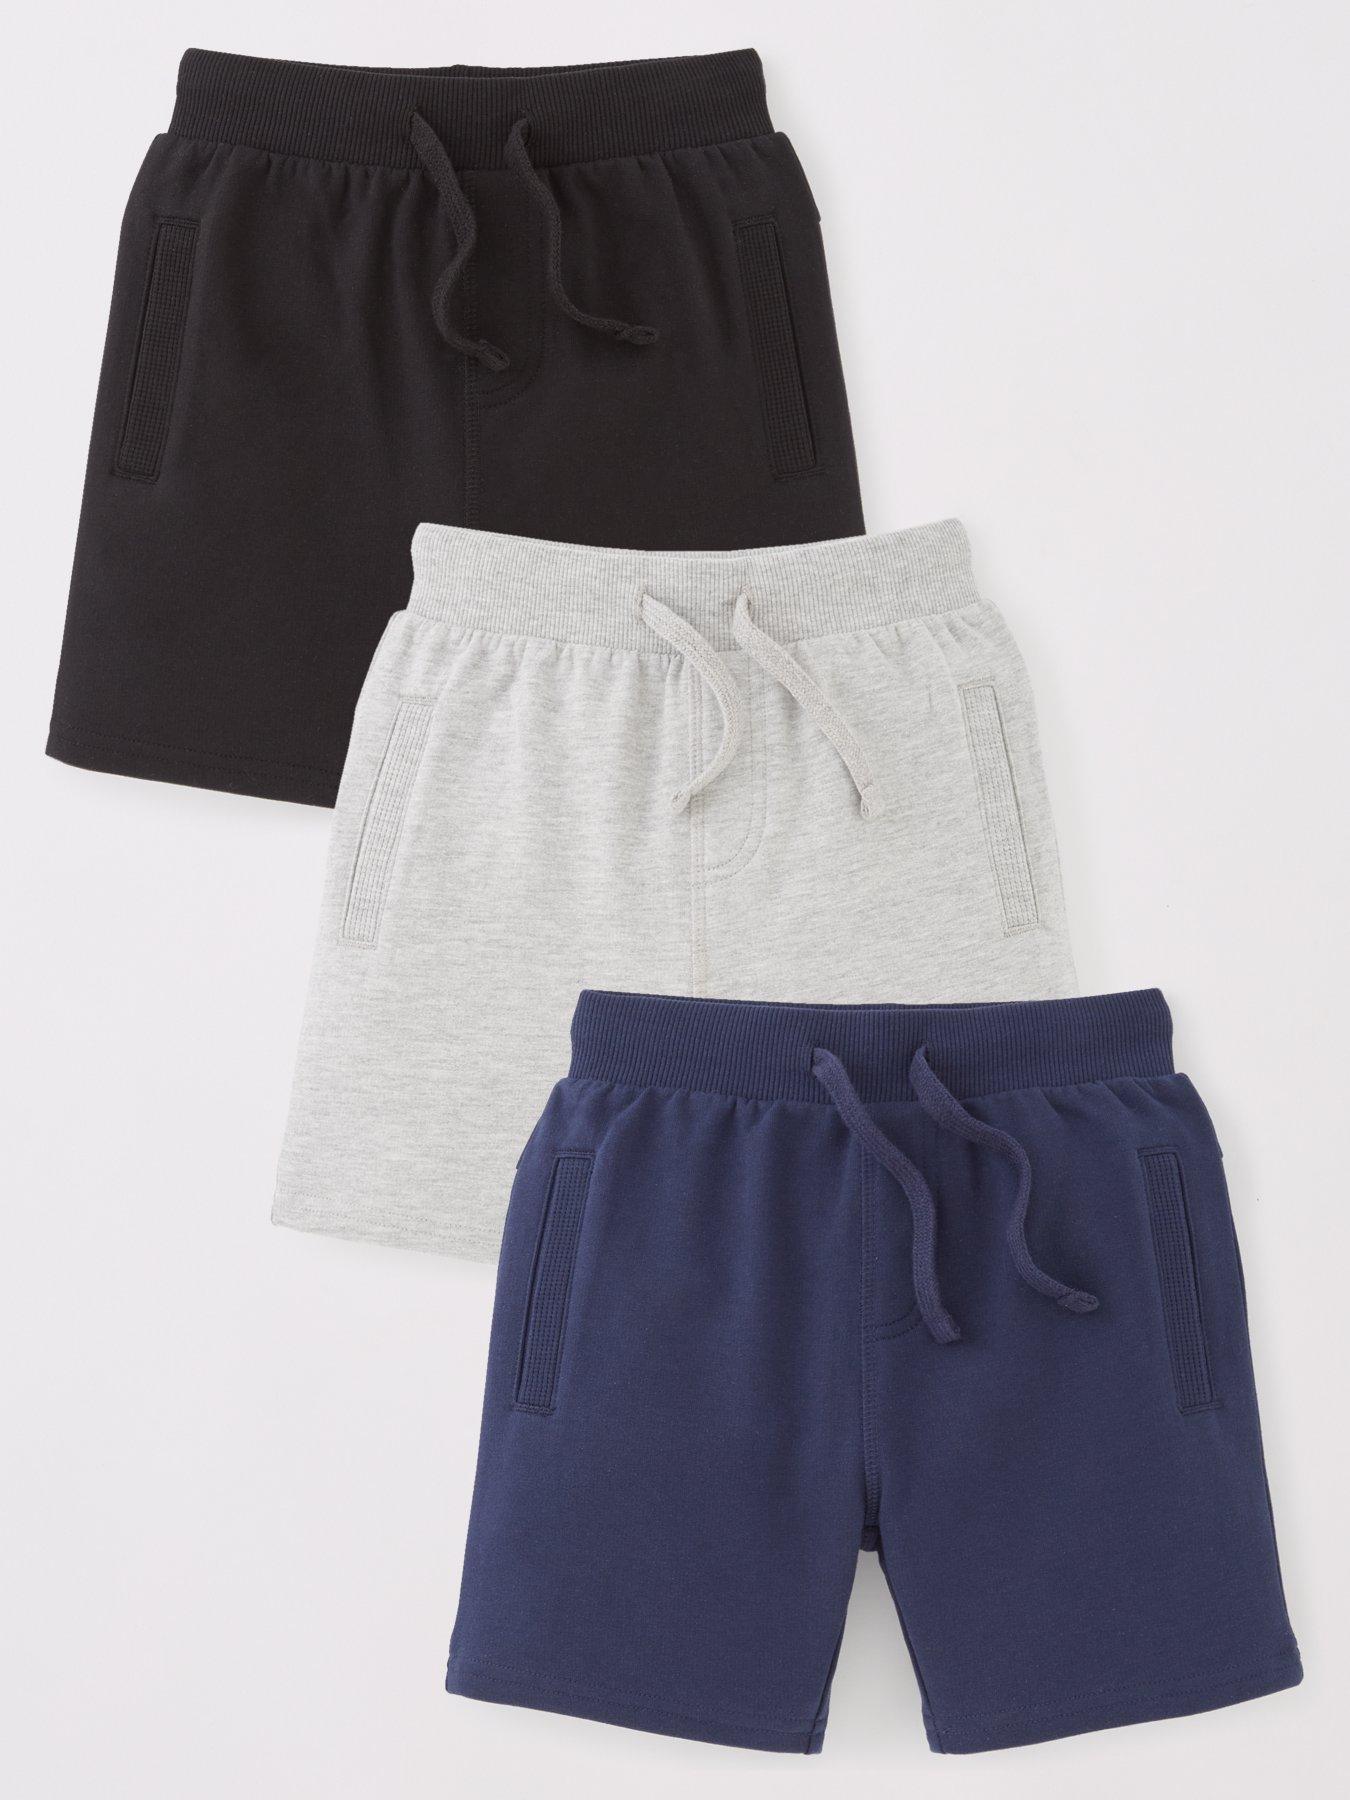 Little Kids (4 - 7) Grey Shorts.